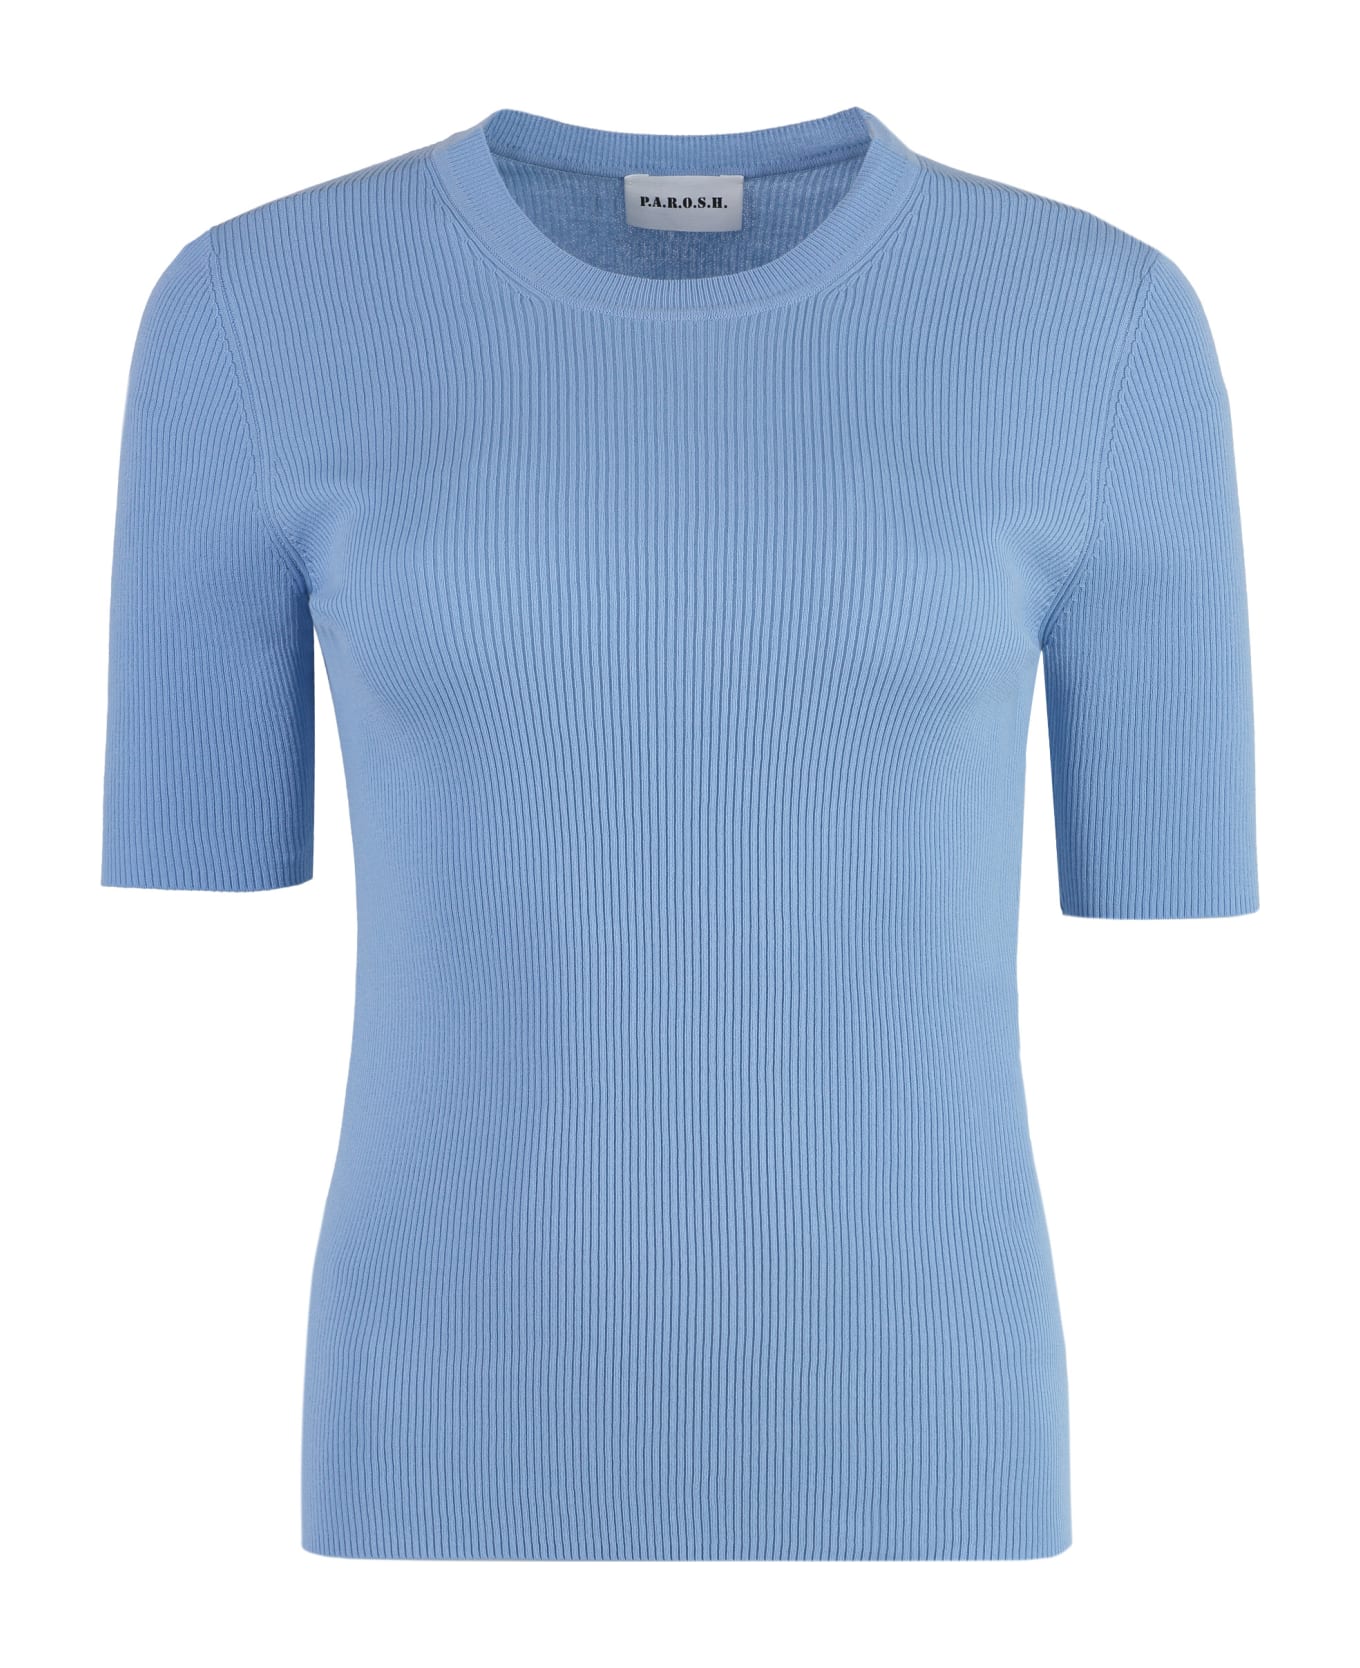 Parosh Light Blue T-shirt - Light Blue Tシャツ